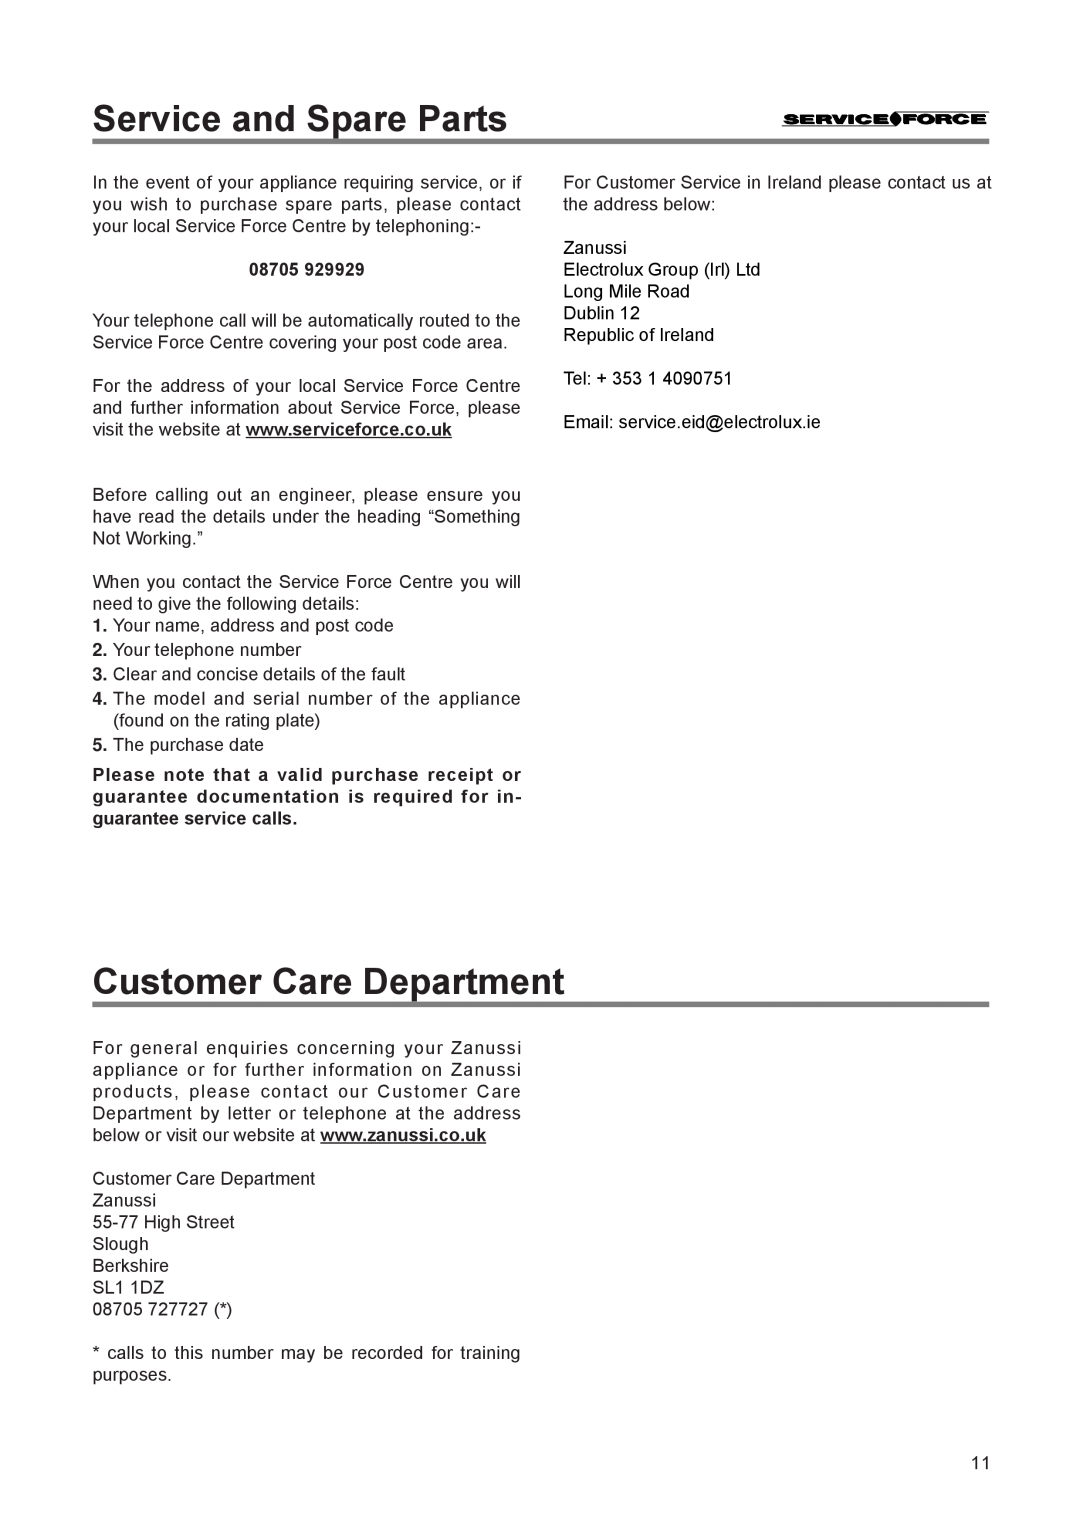 Zanussi ZI 9224 manual Service and Spare Parts, Customer Care Department, 08705 